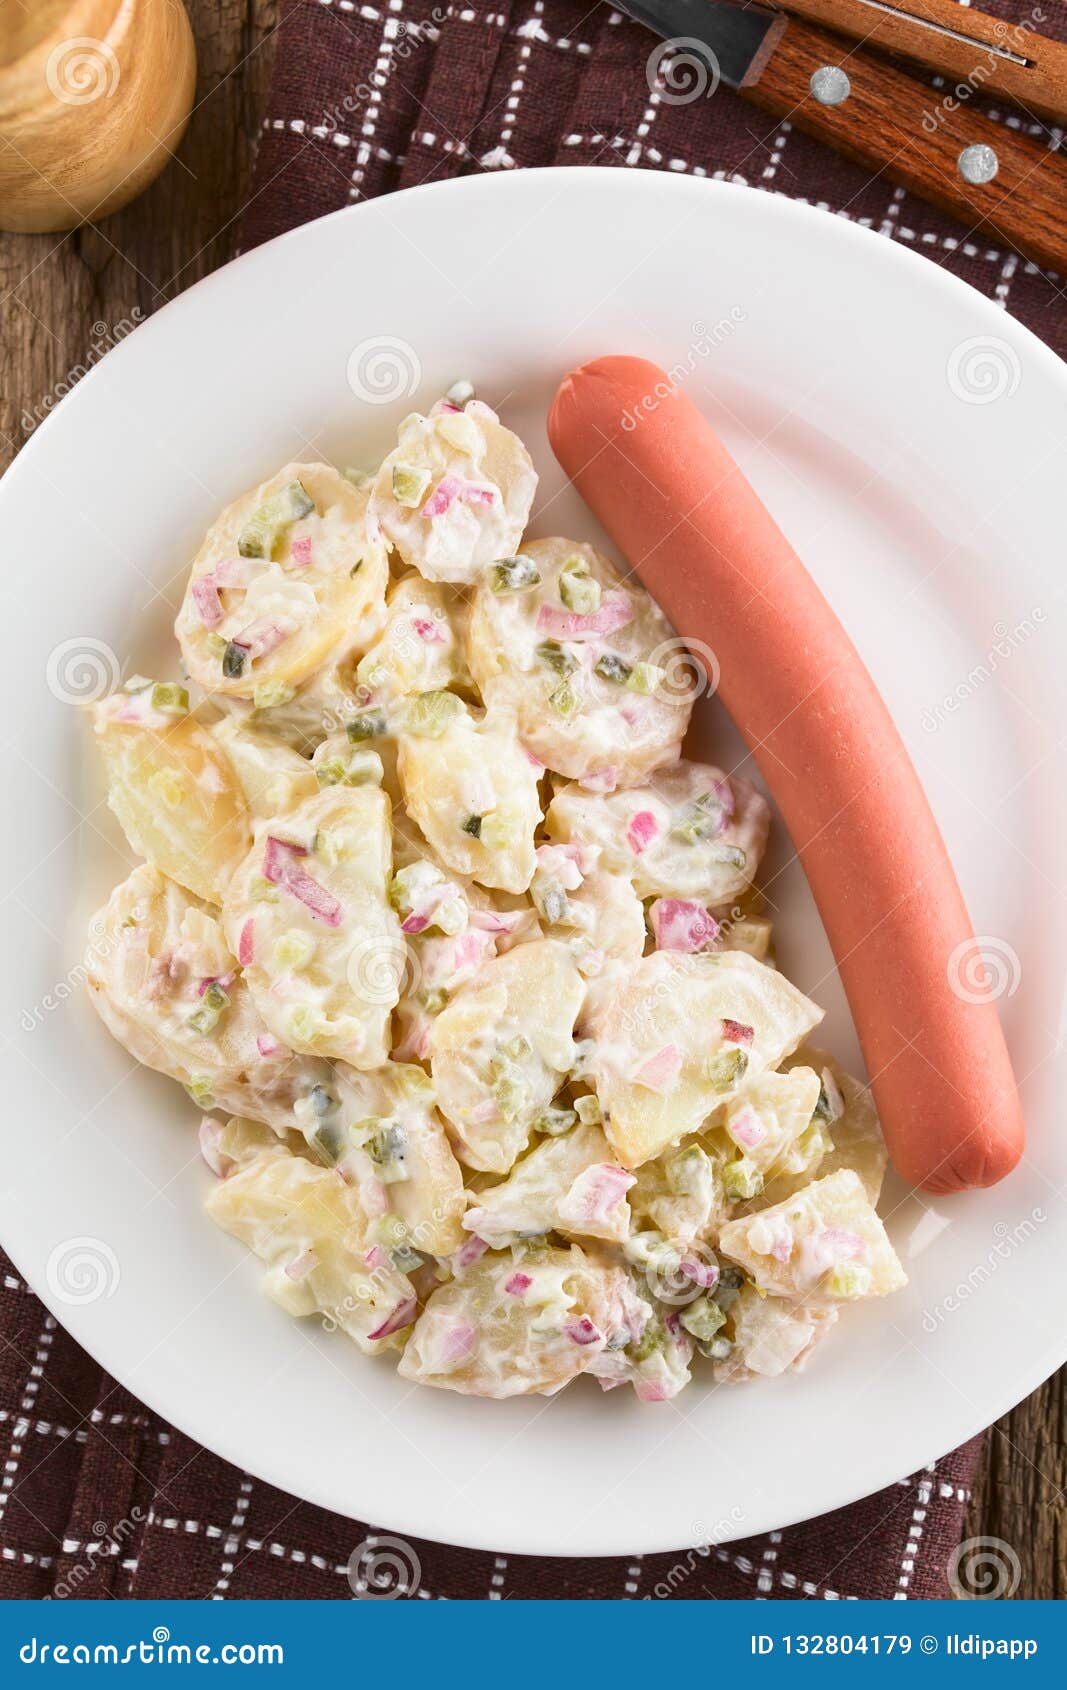 German Kartoffelsalat Potato Salad with Sausage Stock Image - Image of ...